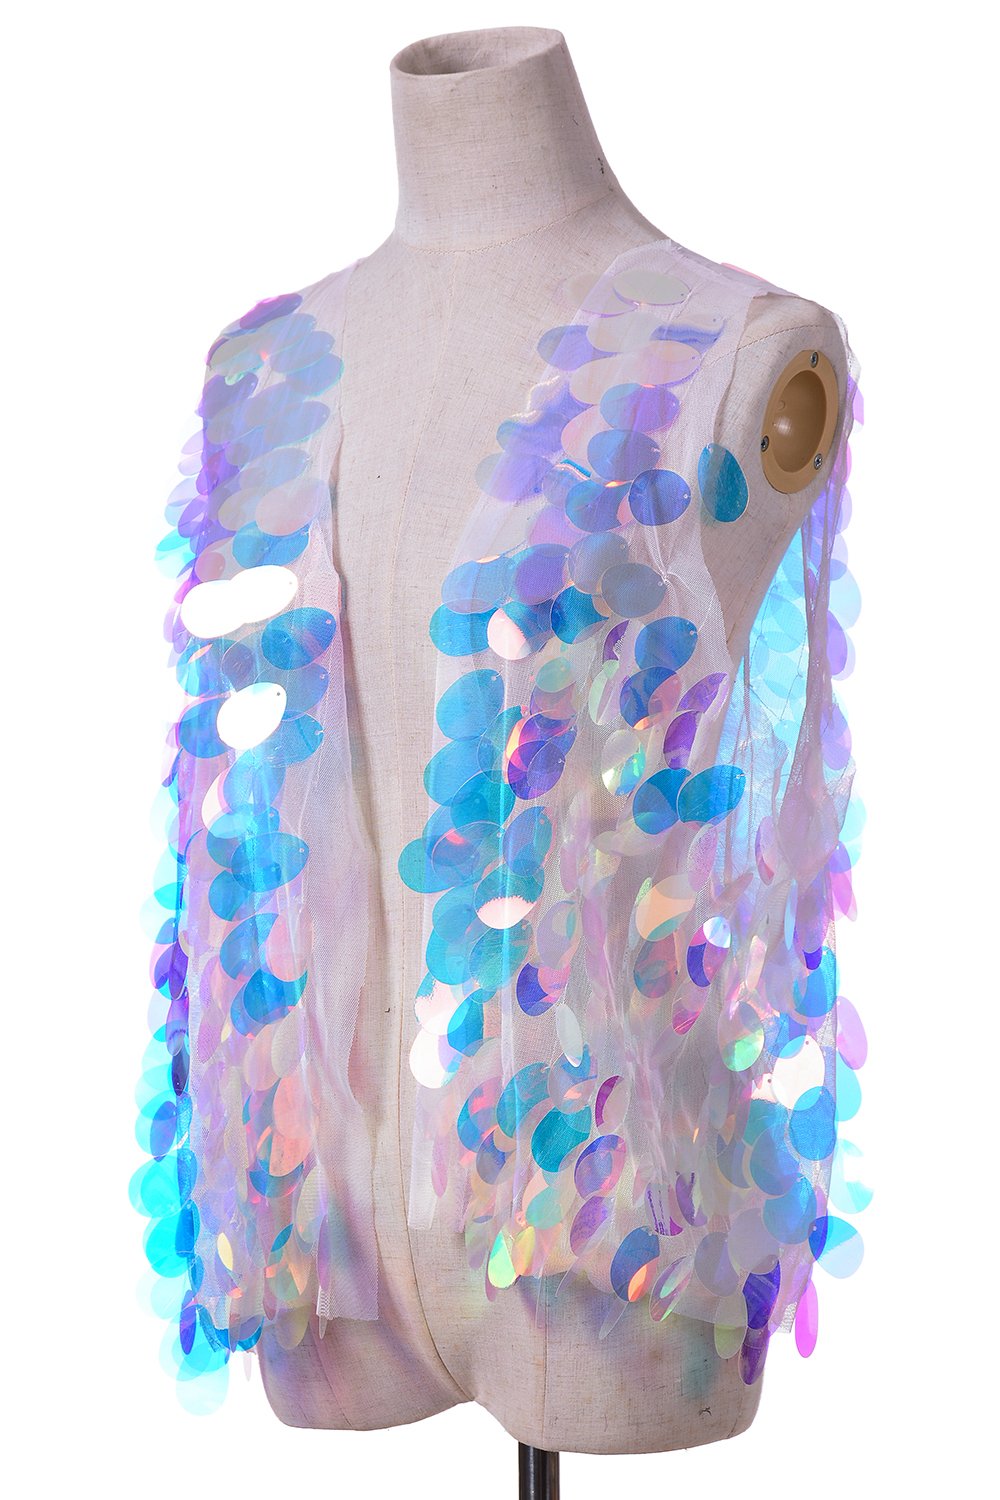 Iridescent Unicorn Tears Sequin Vest